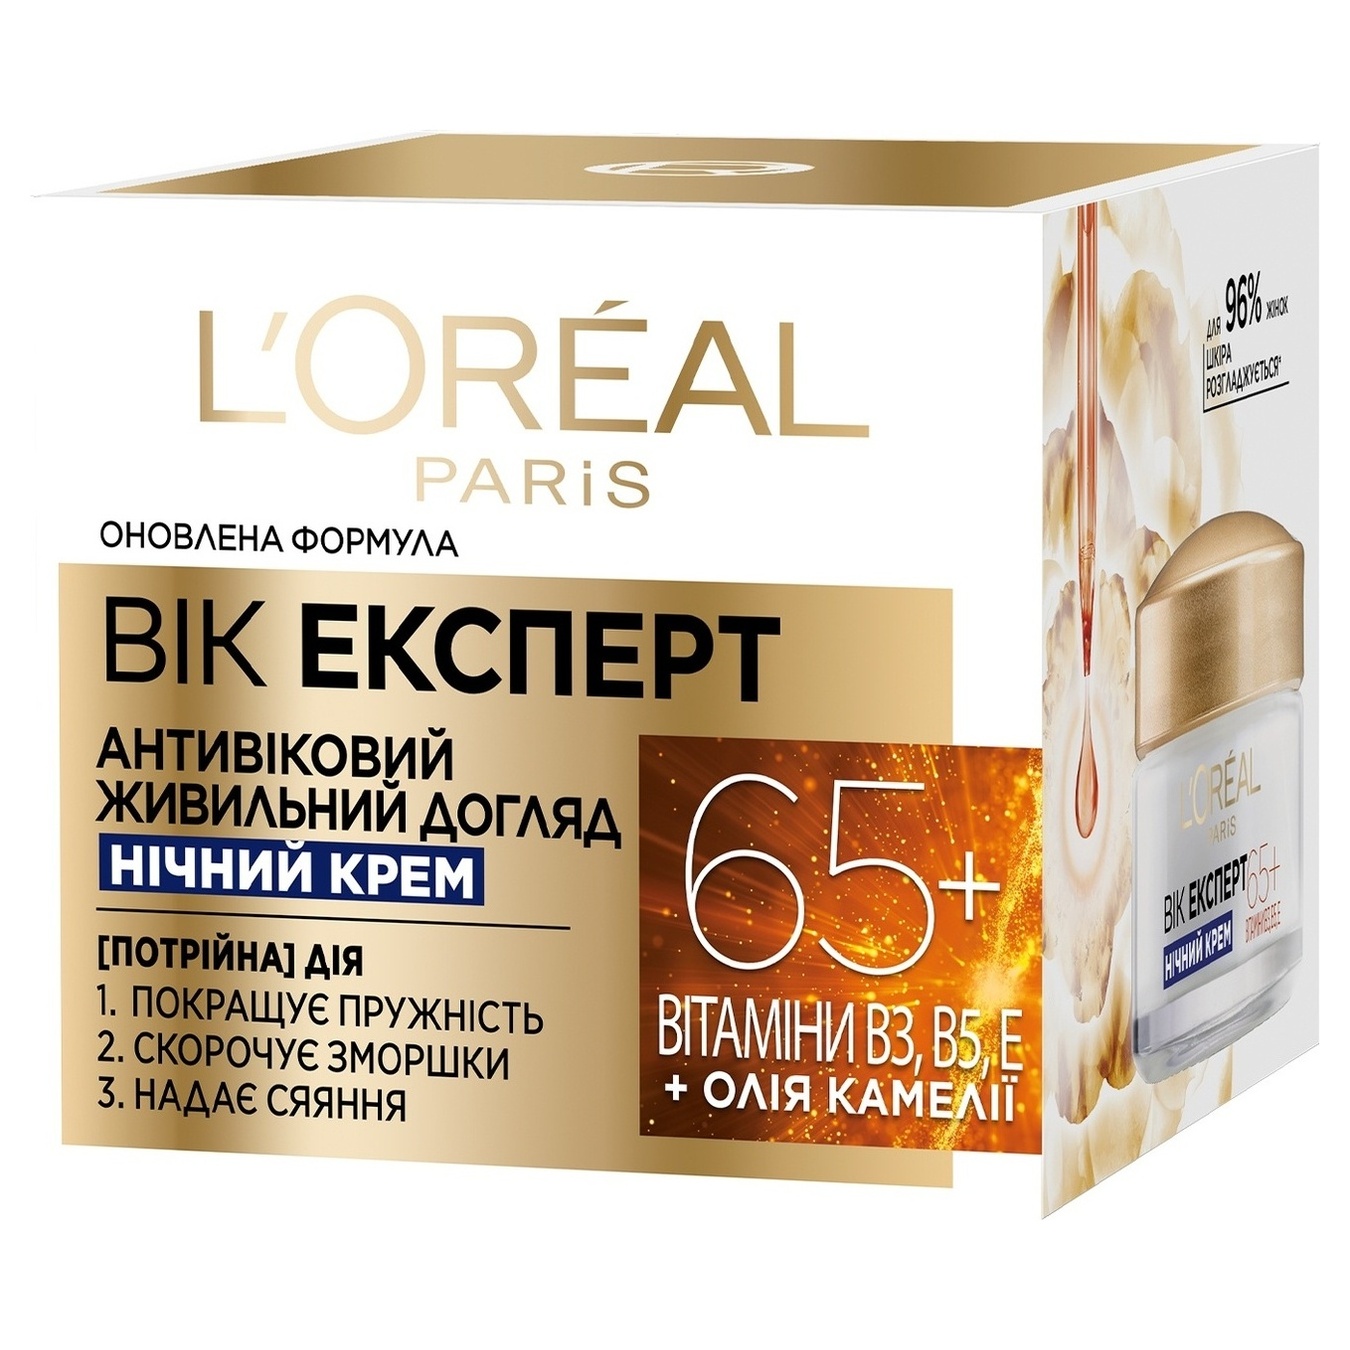 L'oreal Age expert 65+ night anti-wrinkle cream 50ml